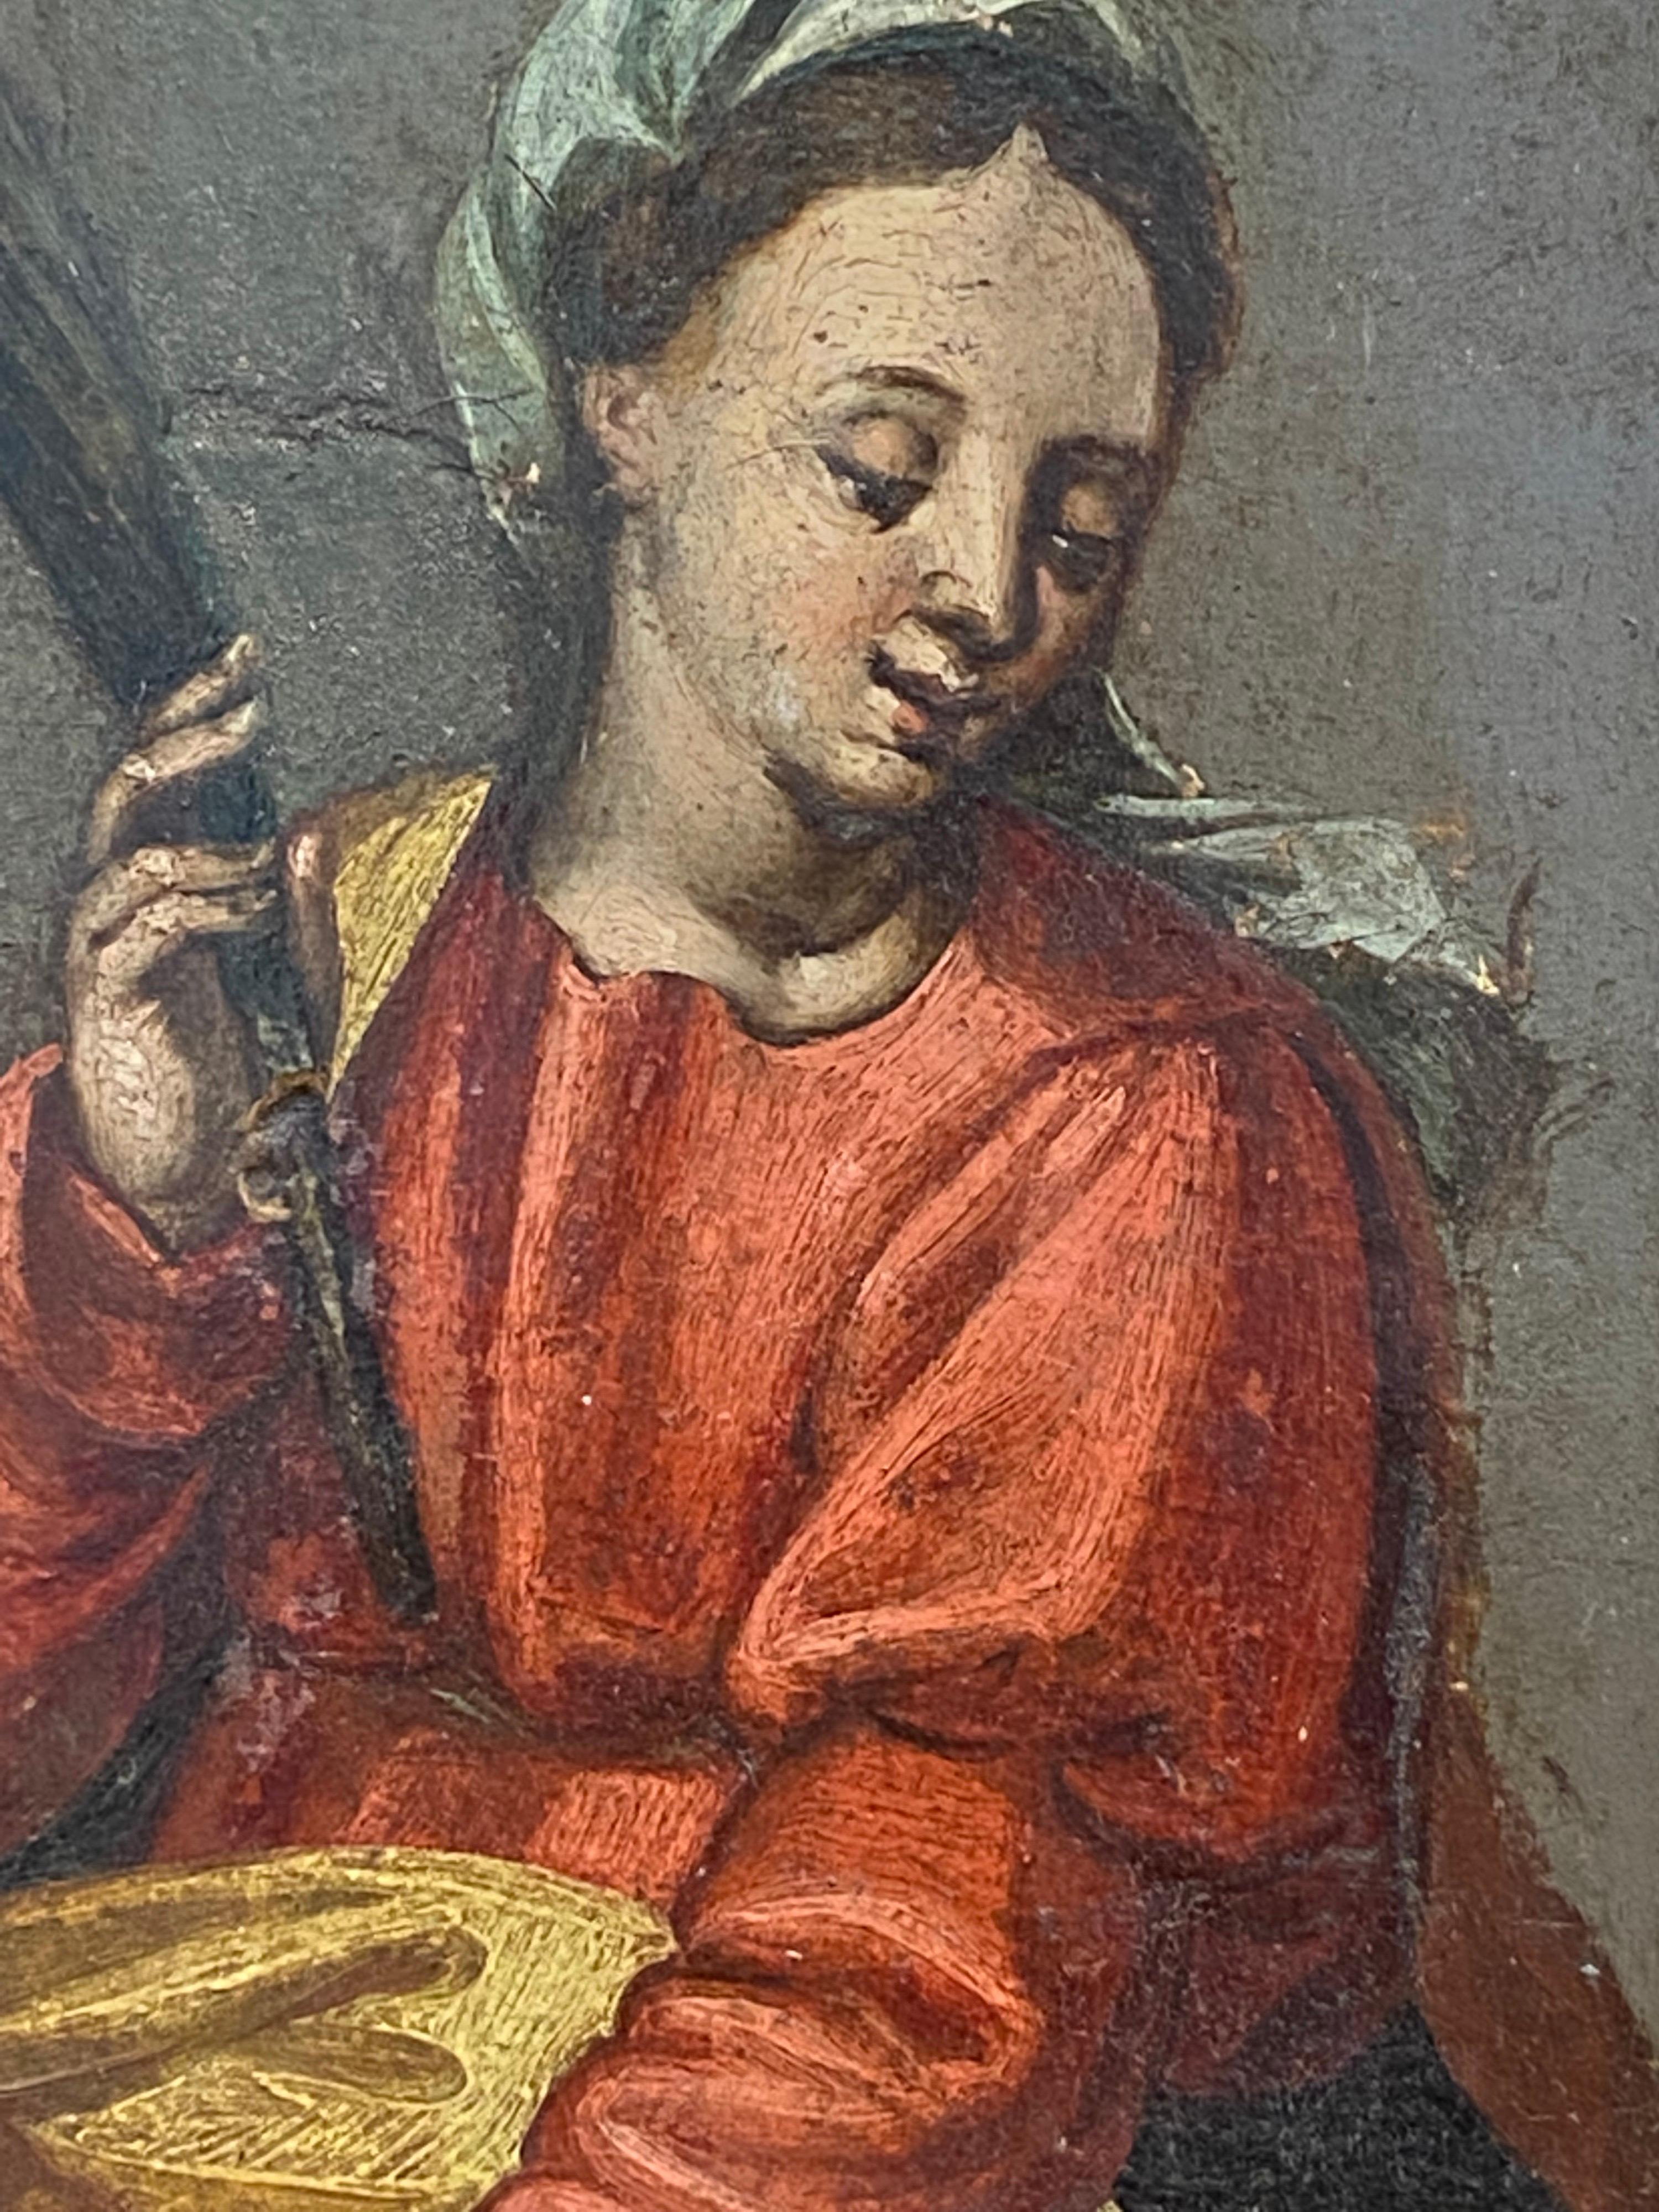 17th Century Italian Old Master Oil on Wood Panel Portrait of Female Saint - Painting by 17thC Italian Old Master